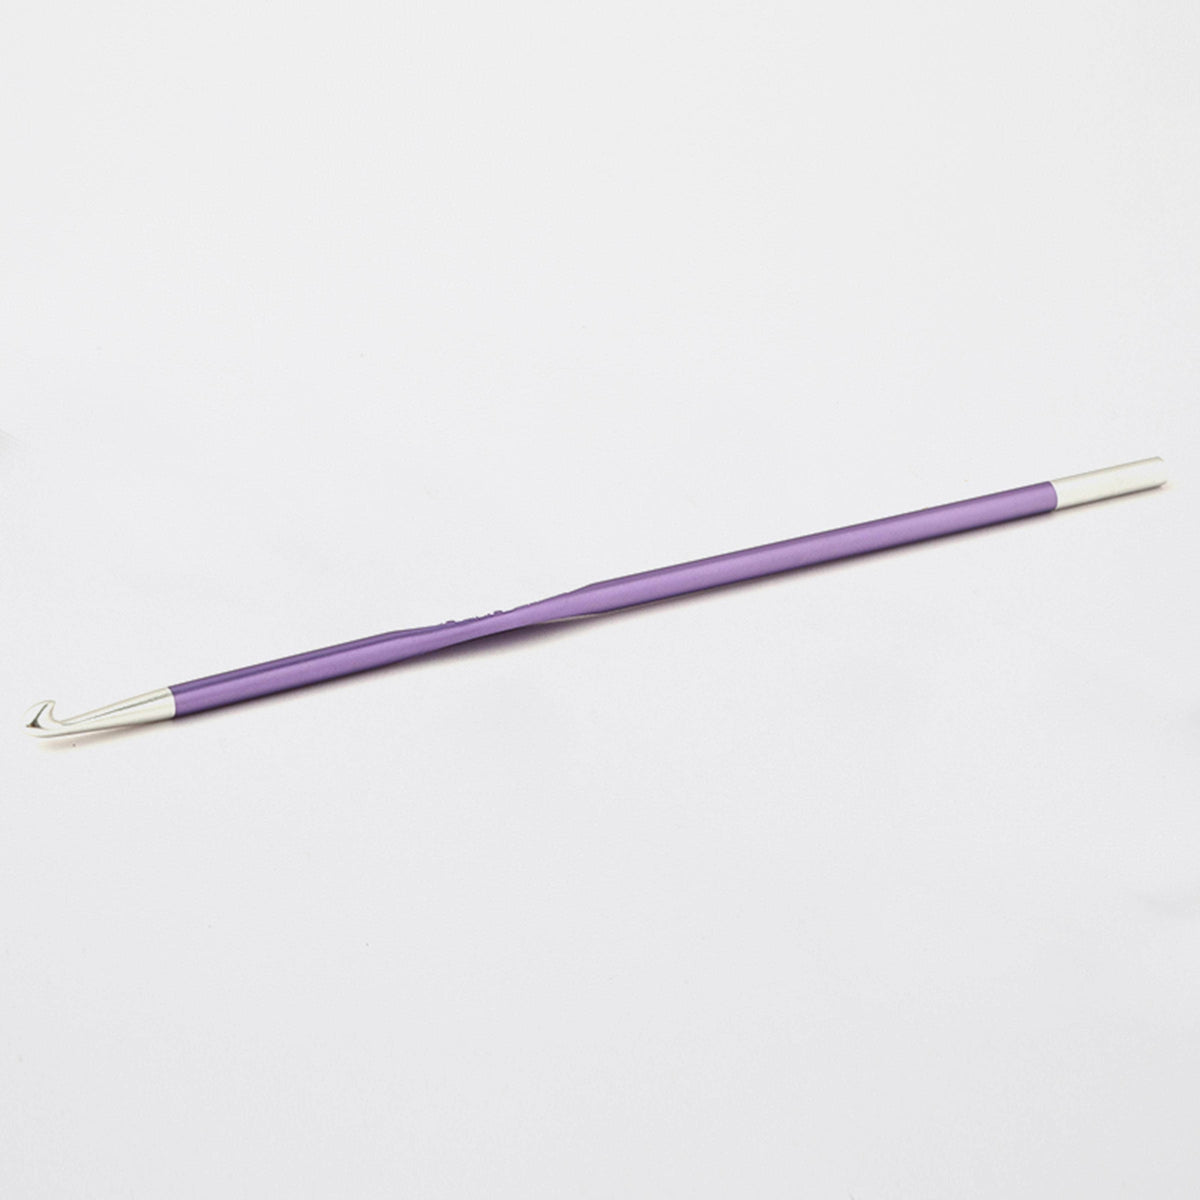 Knitter's Pride Zing Single End Crochet Hooks Needles - 6.00mm (J